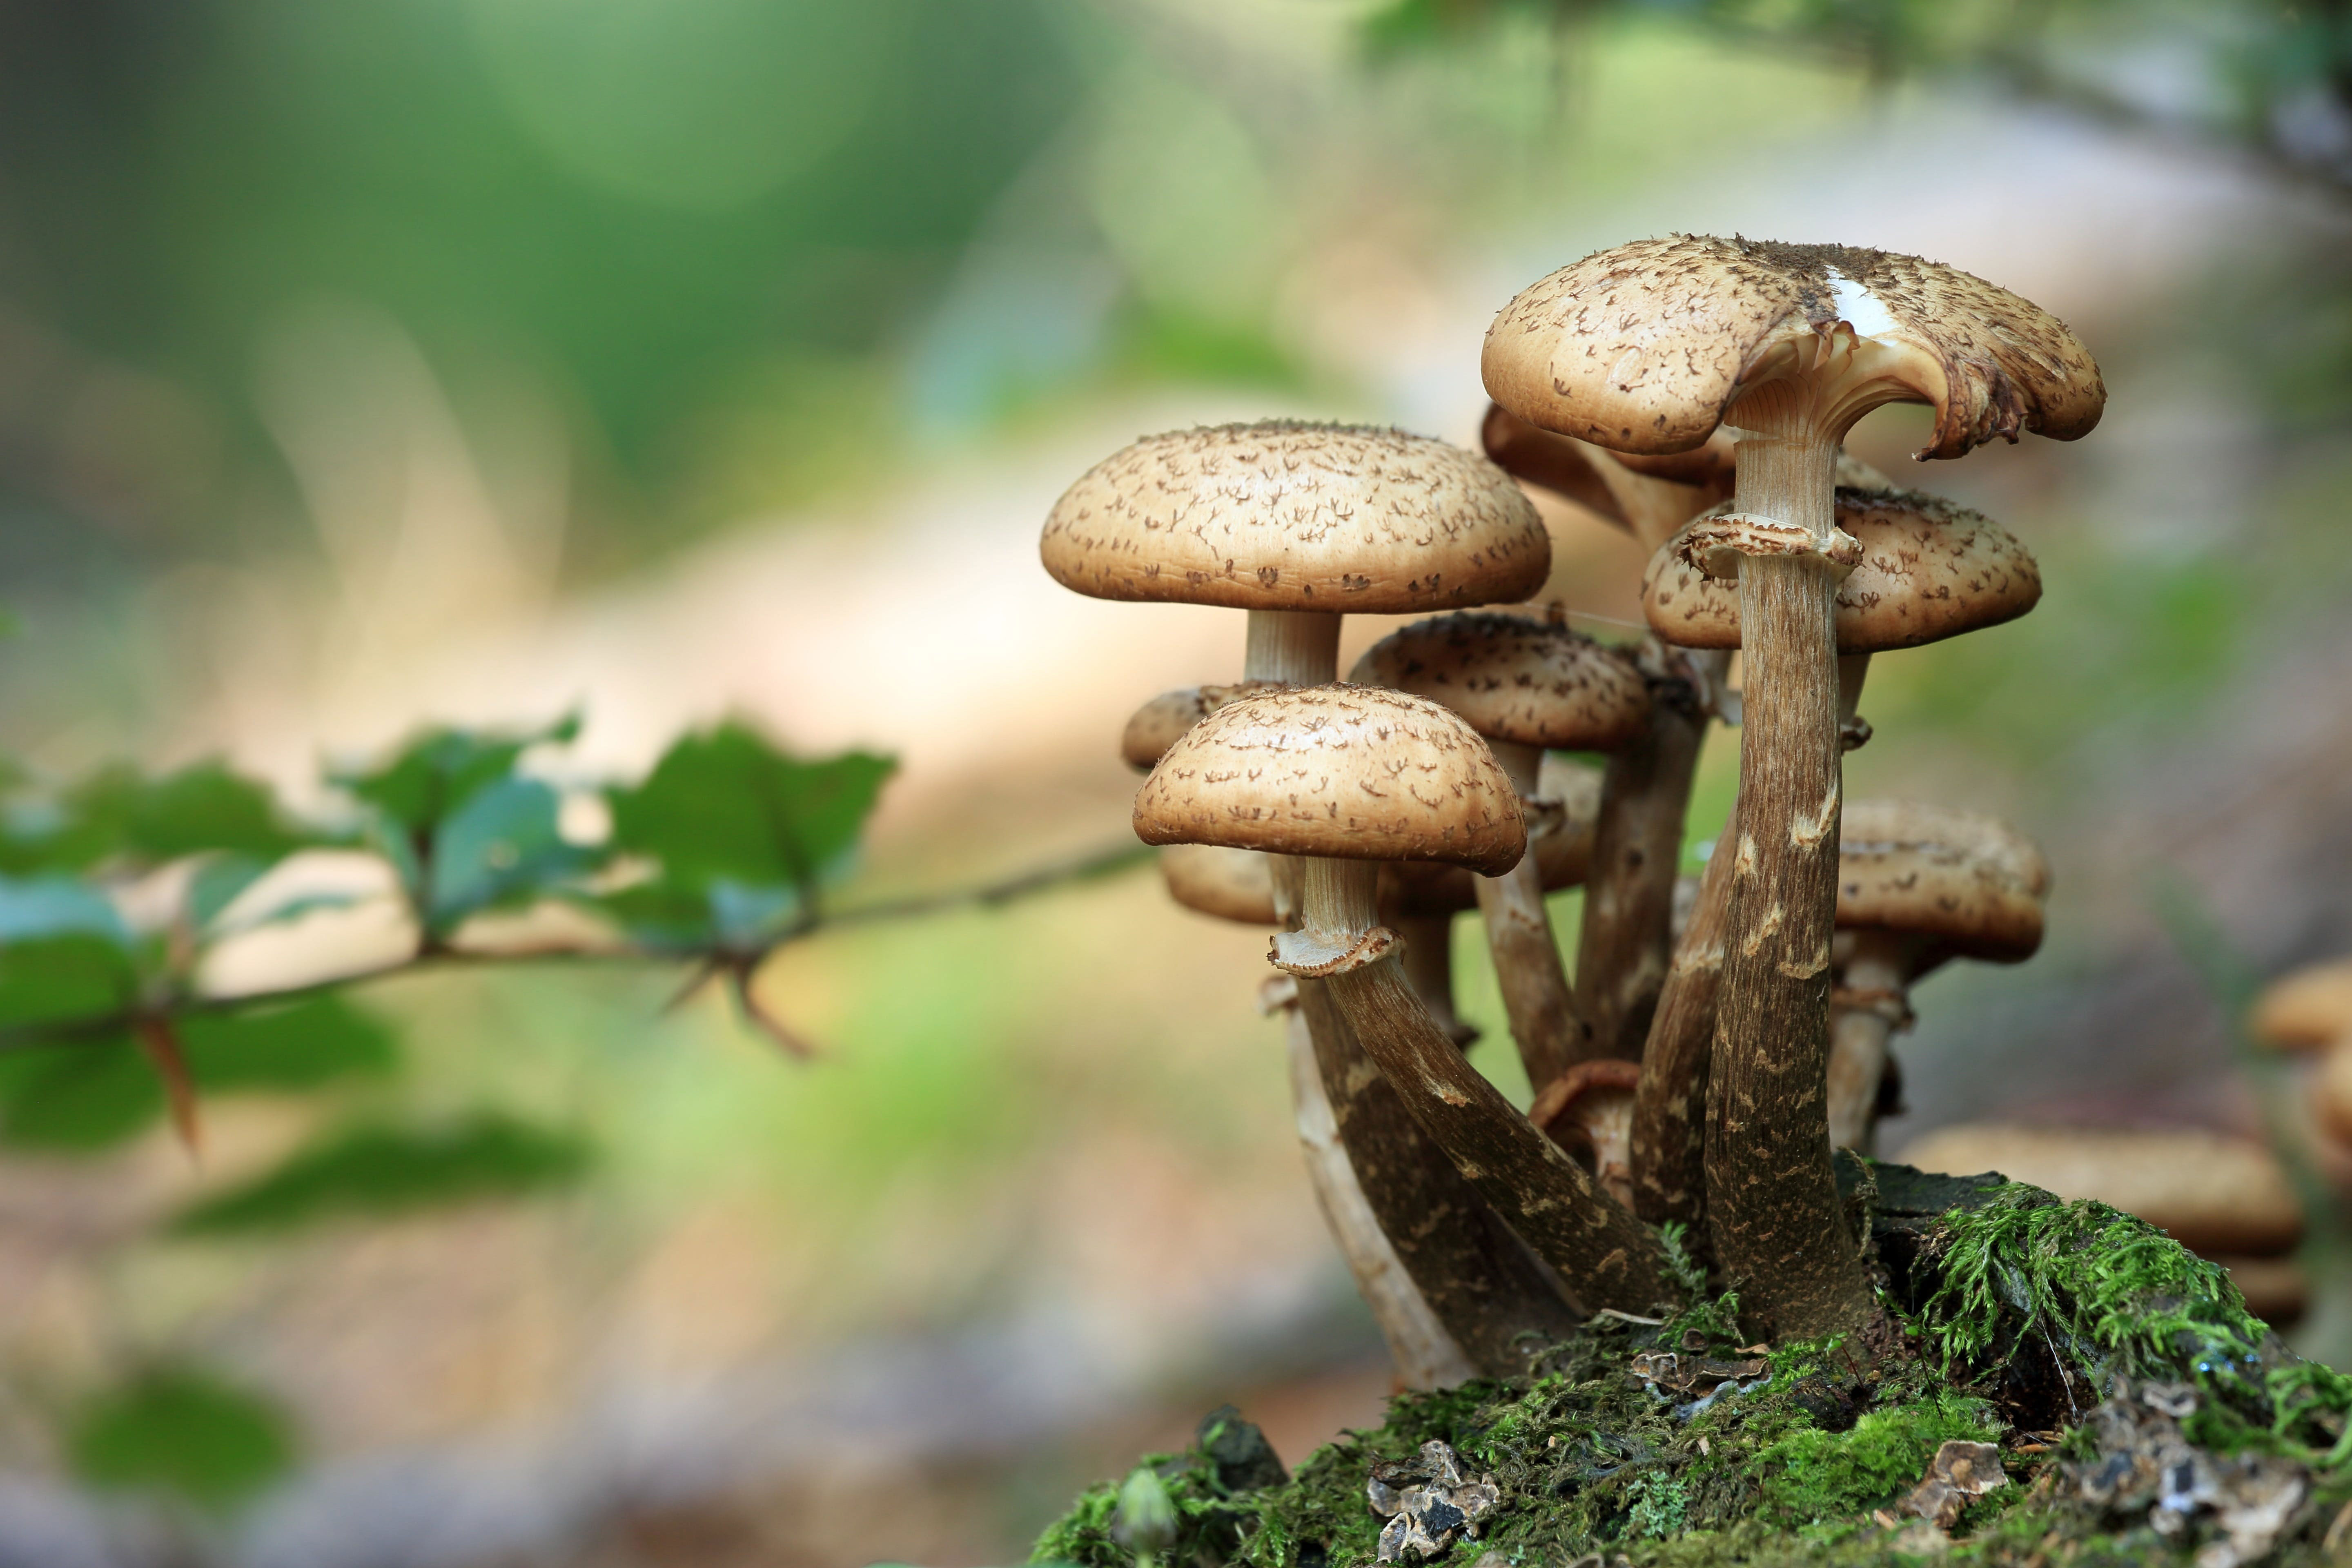 close up view of mushrooms